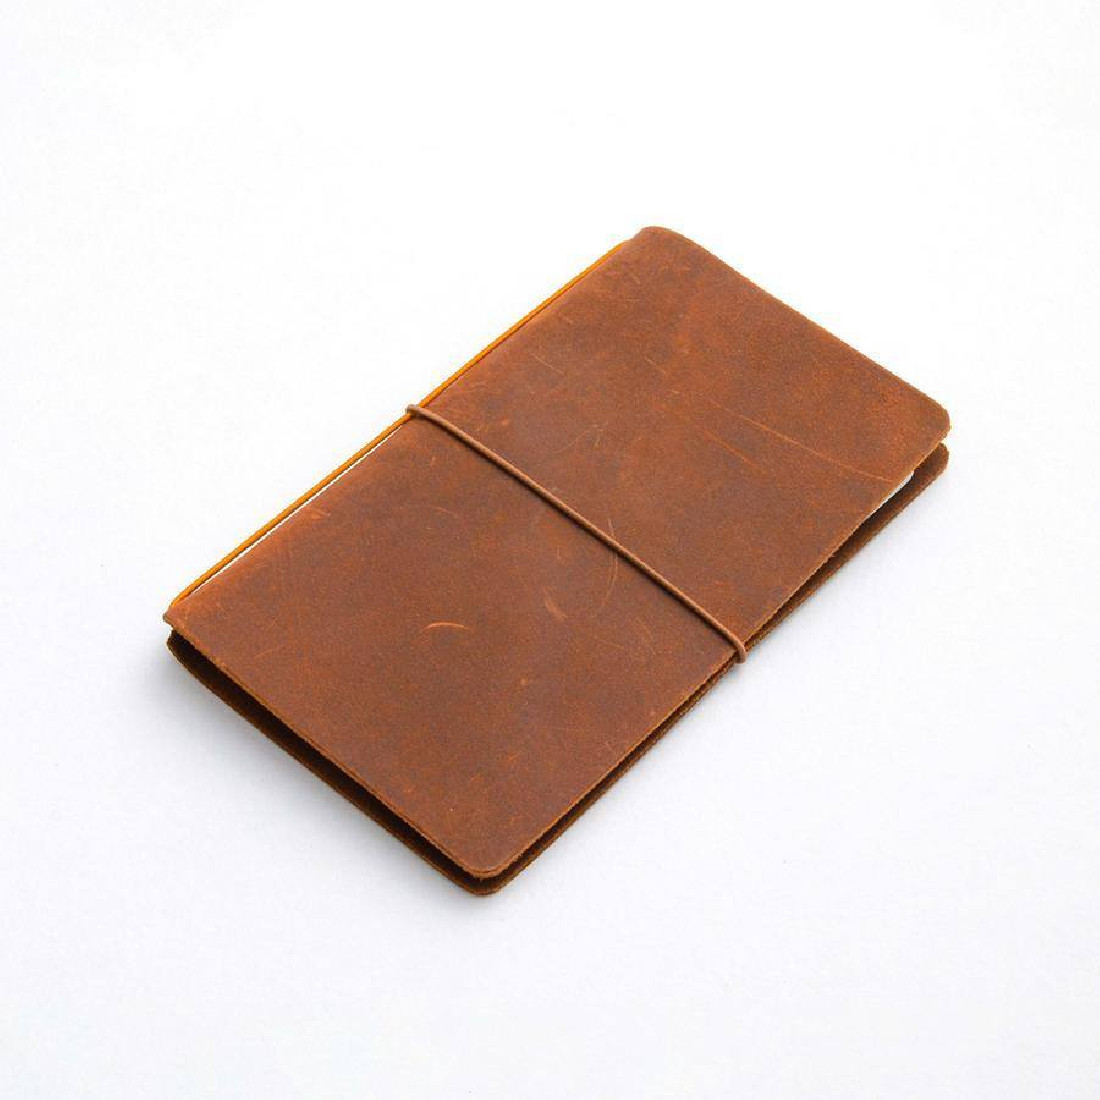 Endless Explorer Pocket - Refillable Leather Journal